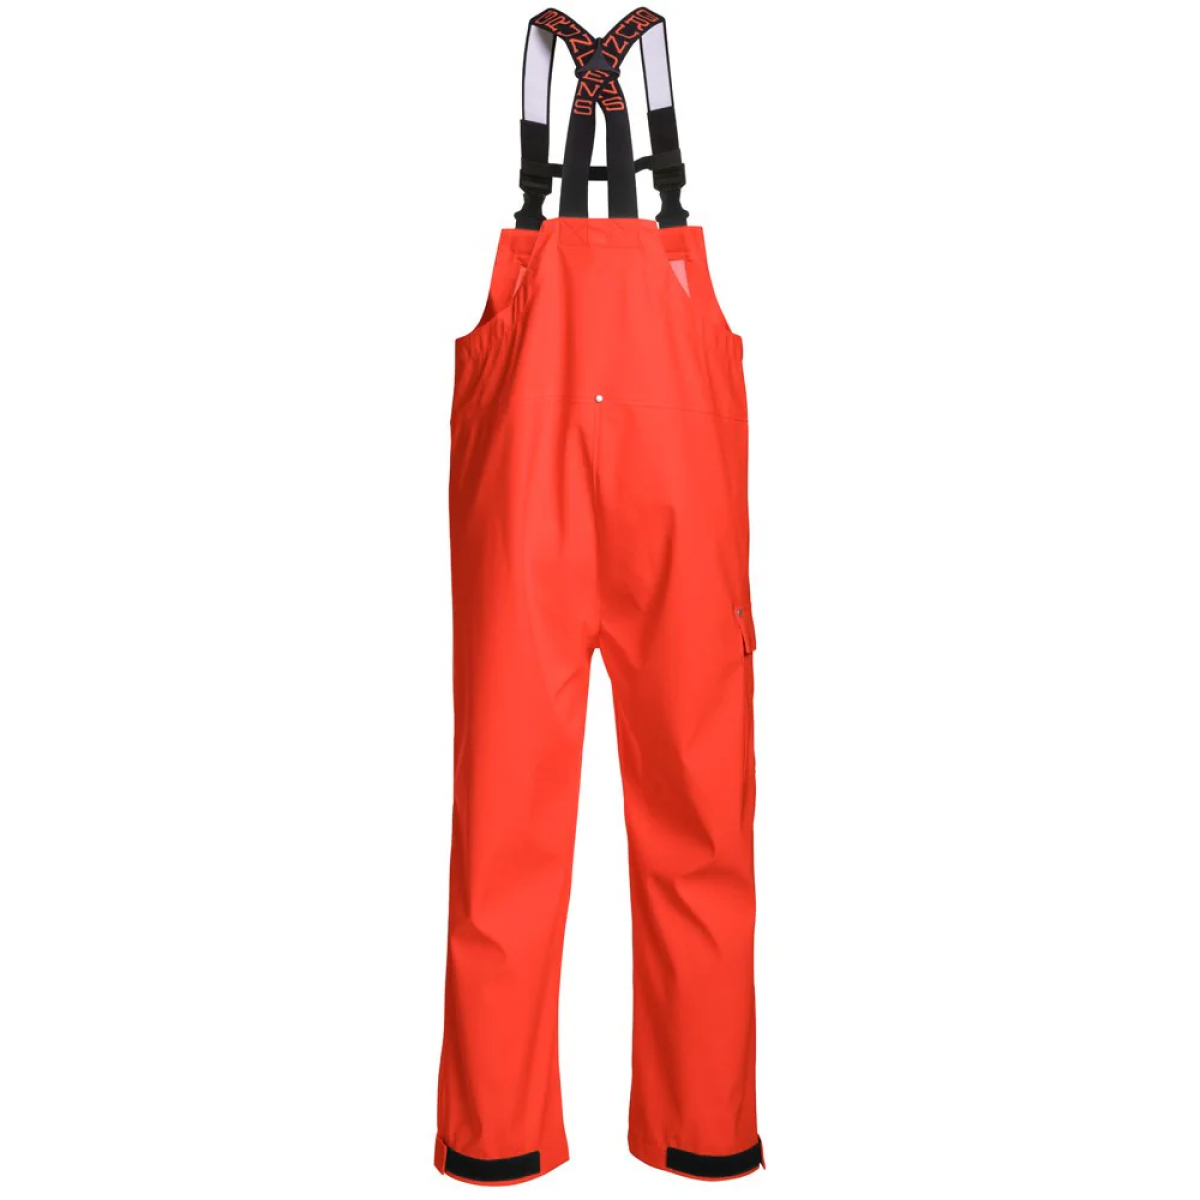 Grundens Neptune 509 Commercial Fishing Bib Pants Orange Size XL - 10075